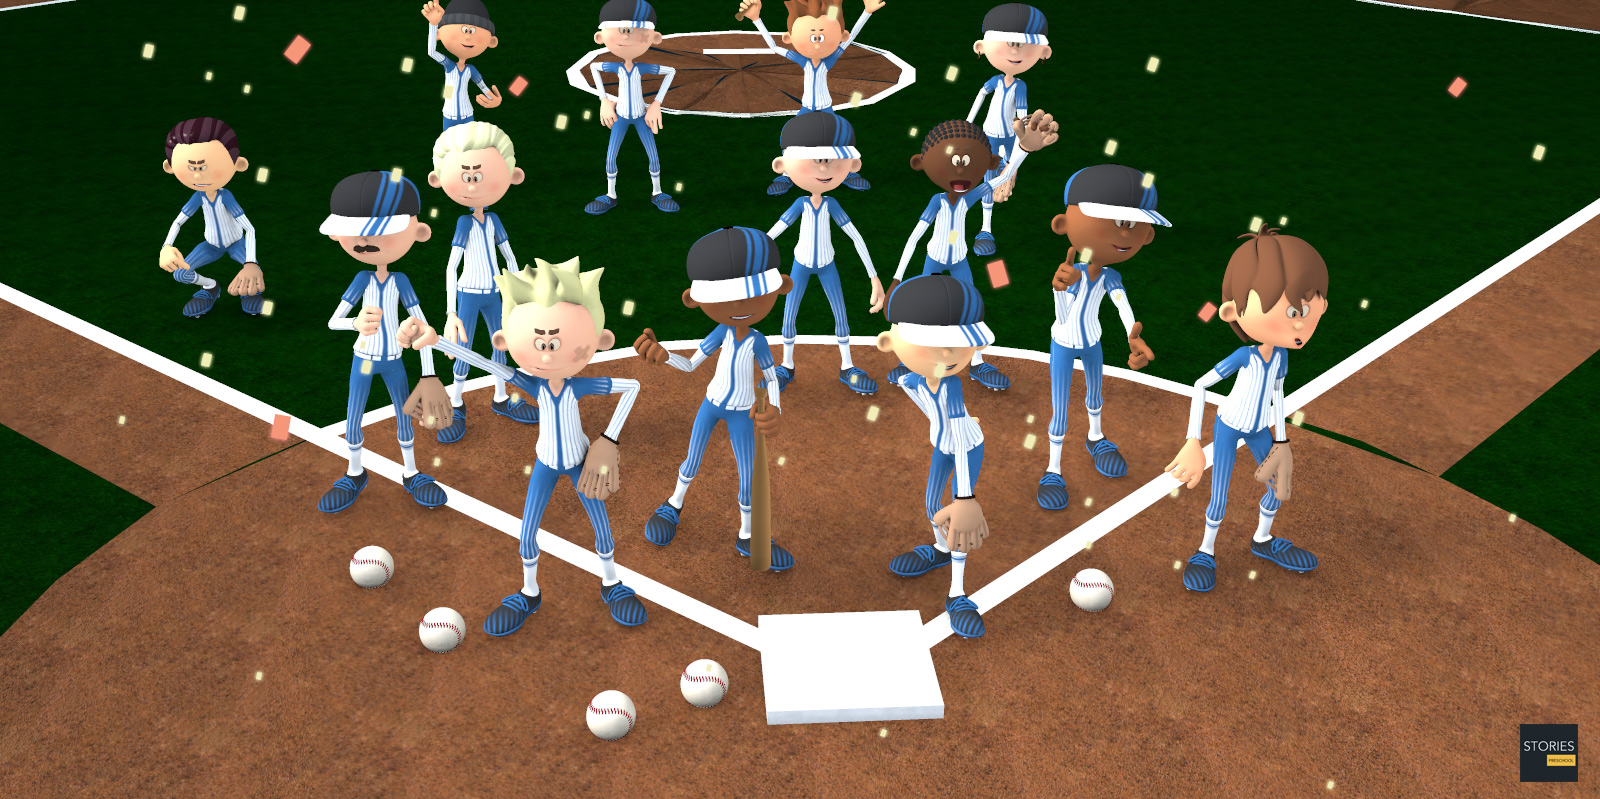 Baseball | Stories Preschool